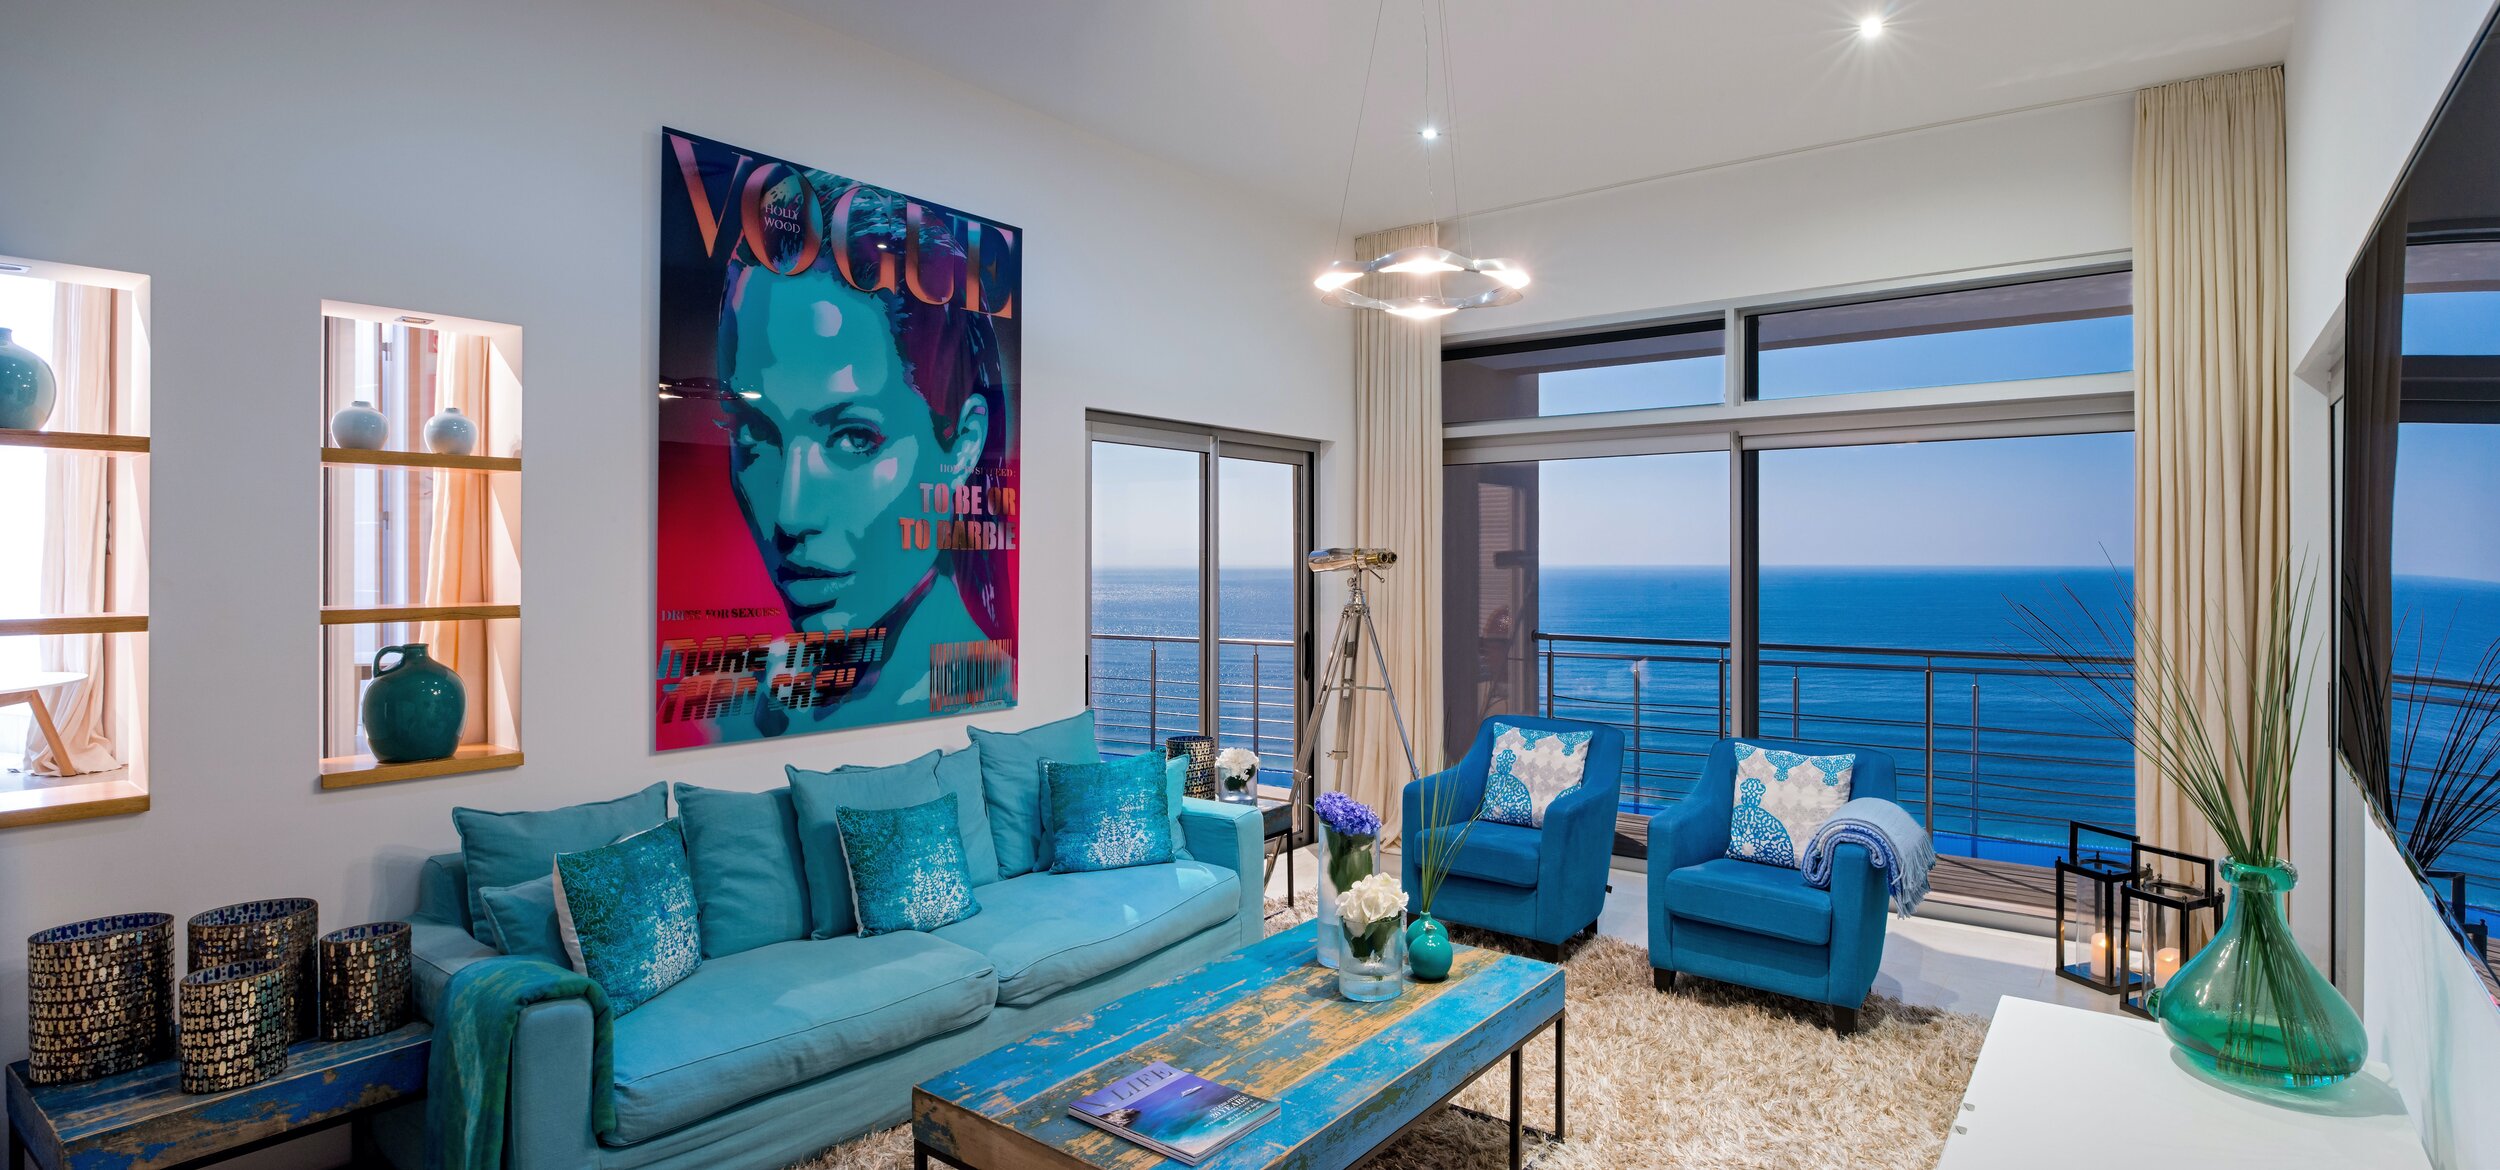 Villa Mar Azul - Living area and view.jpg